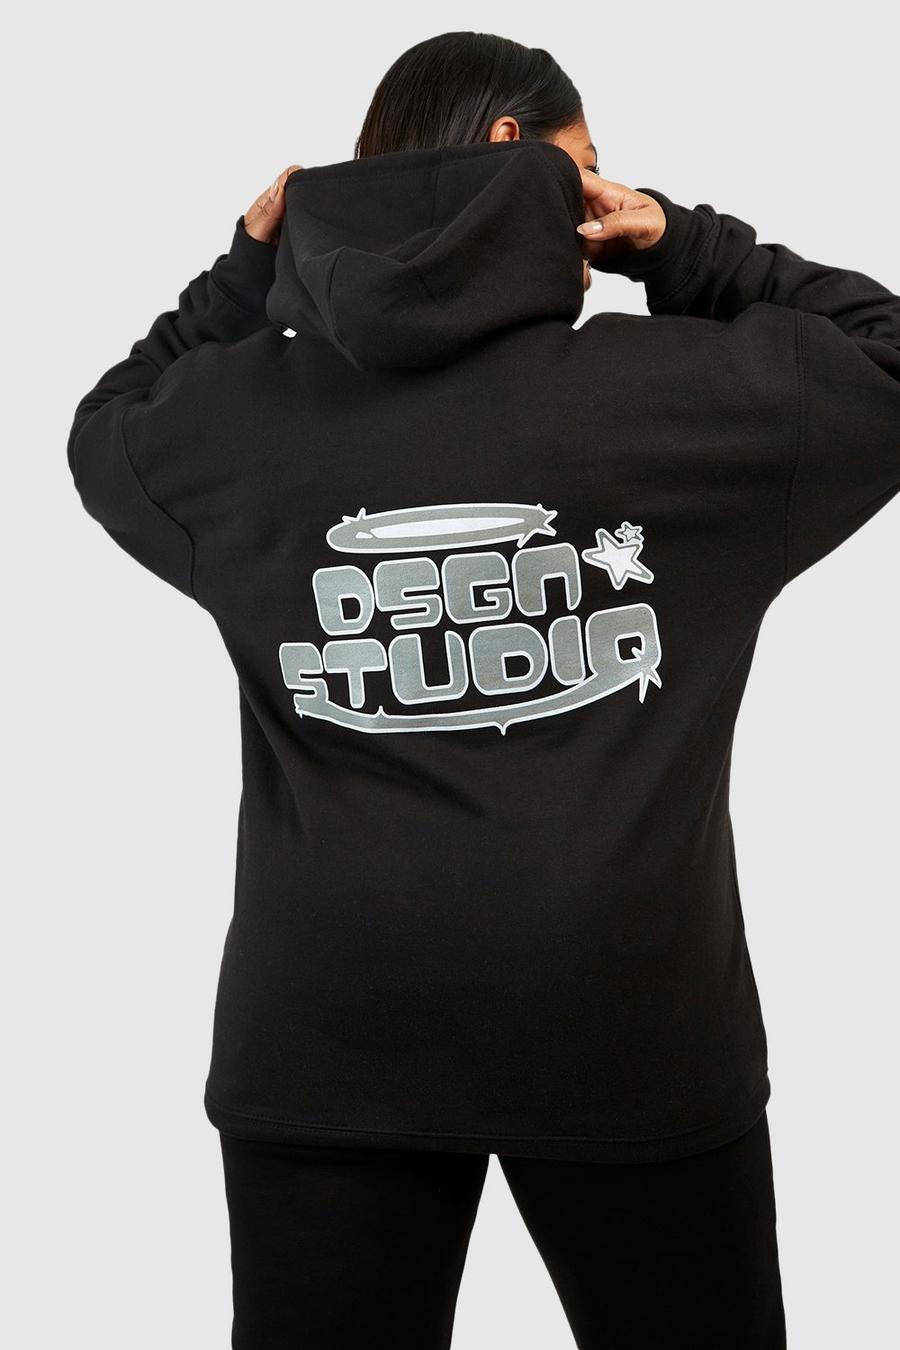 Grande taille - Sweat à capuche oversize à slogan Dsgn Studio, Black